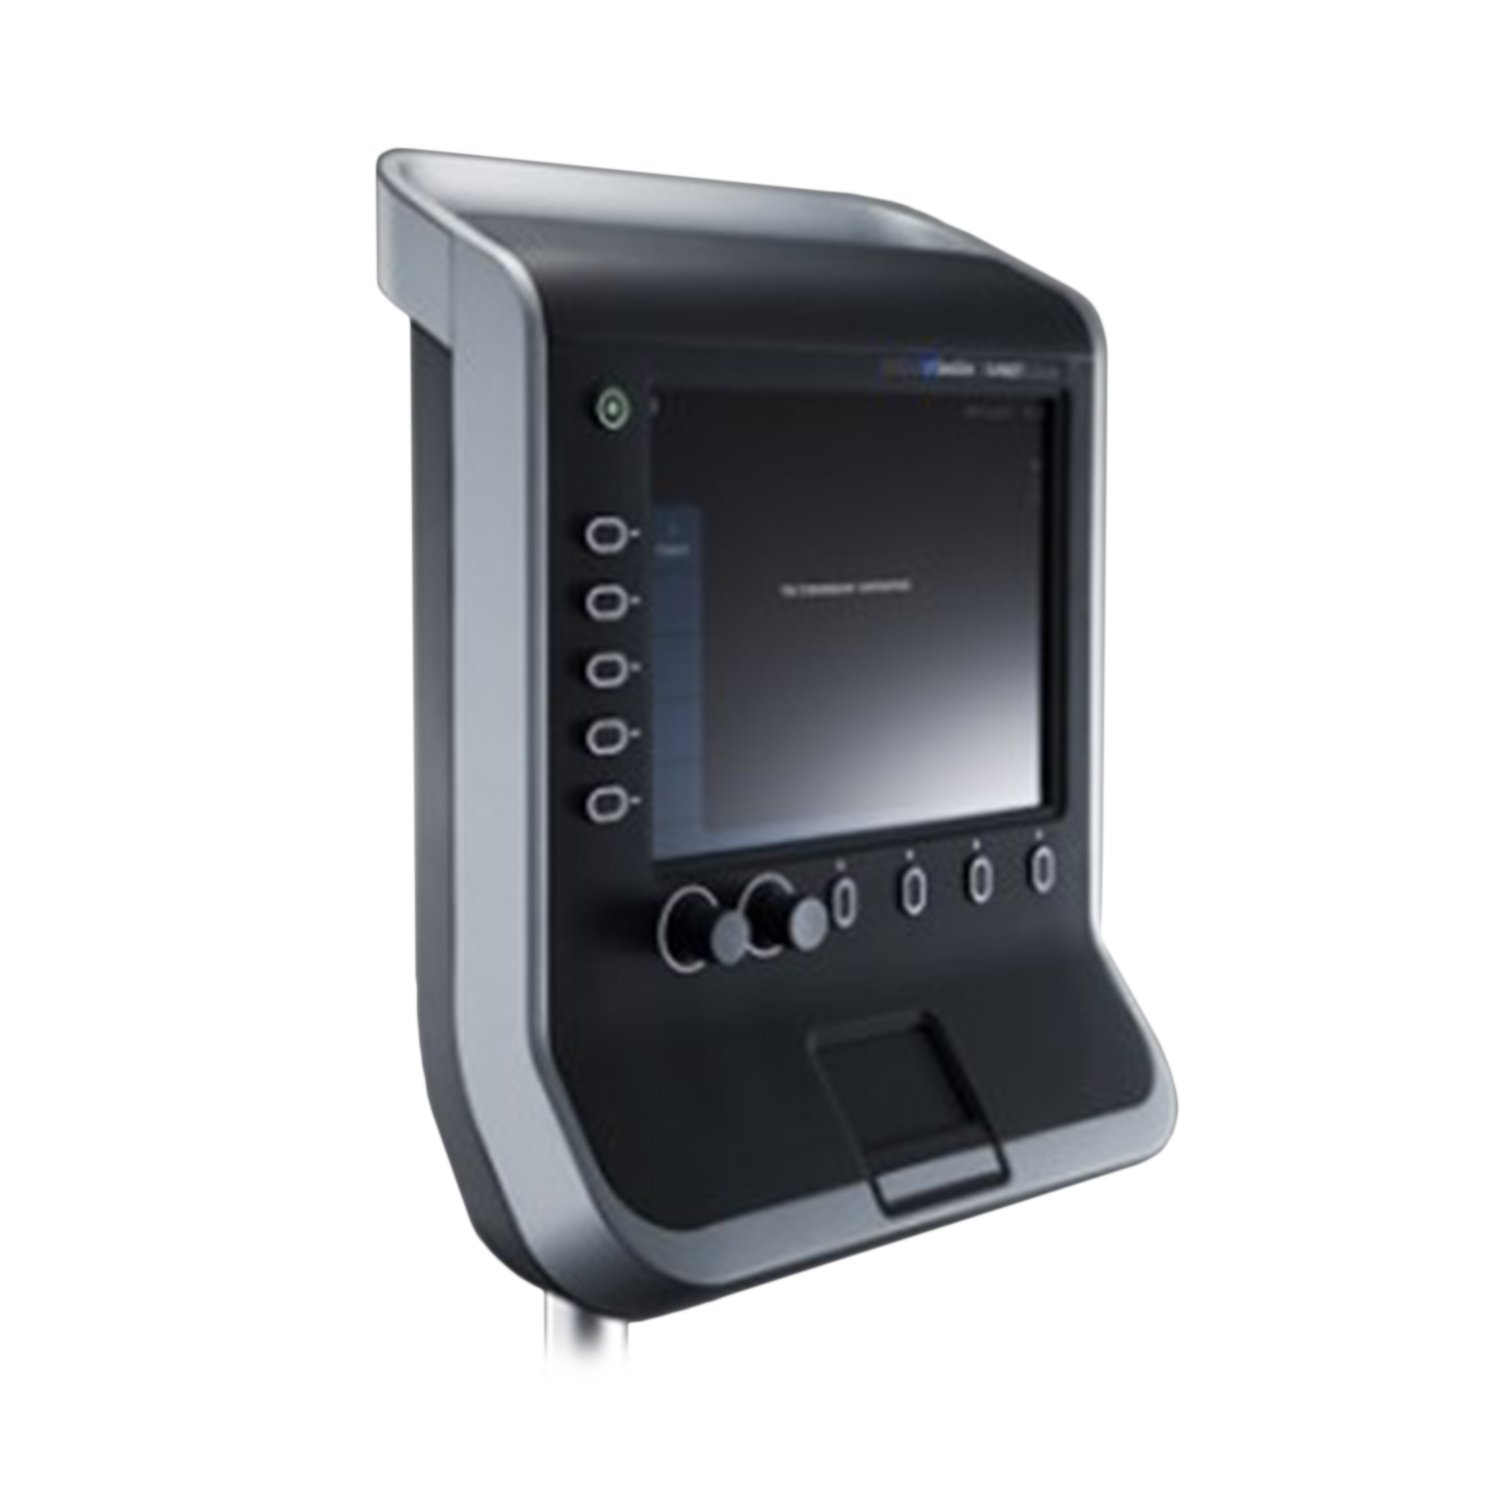 Sonosite S-Series Ultrasound System